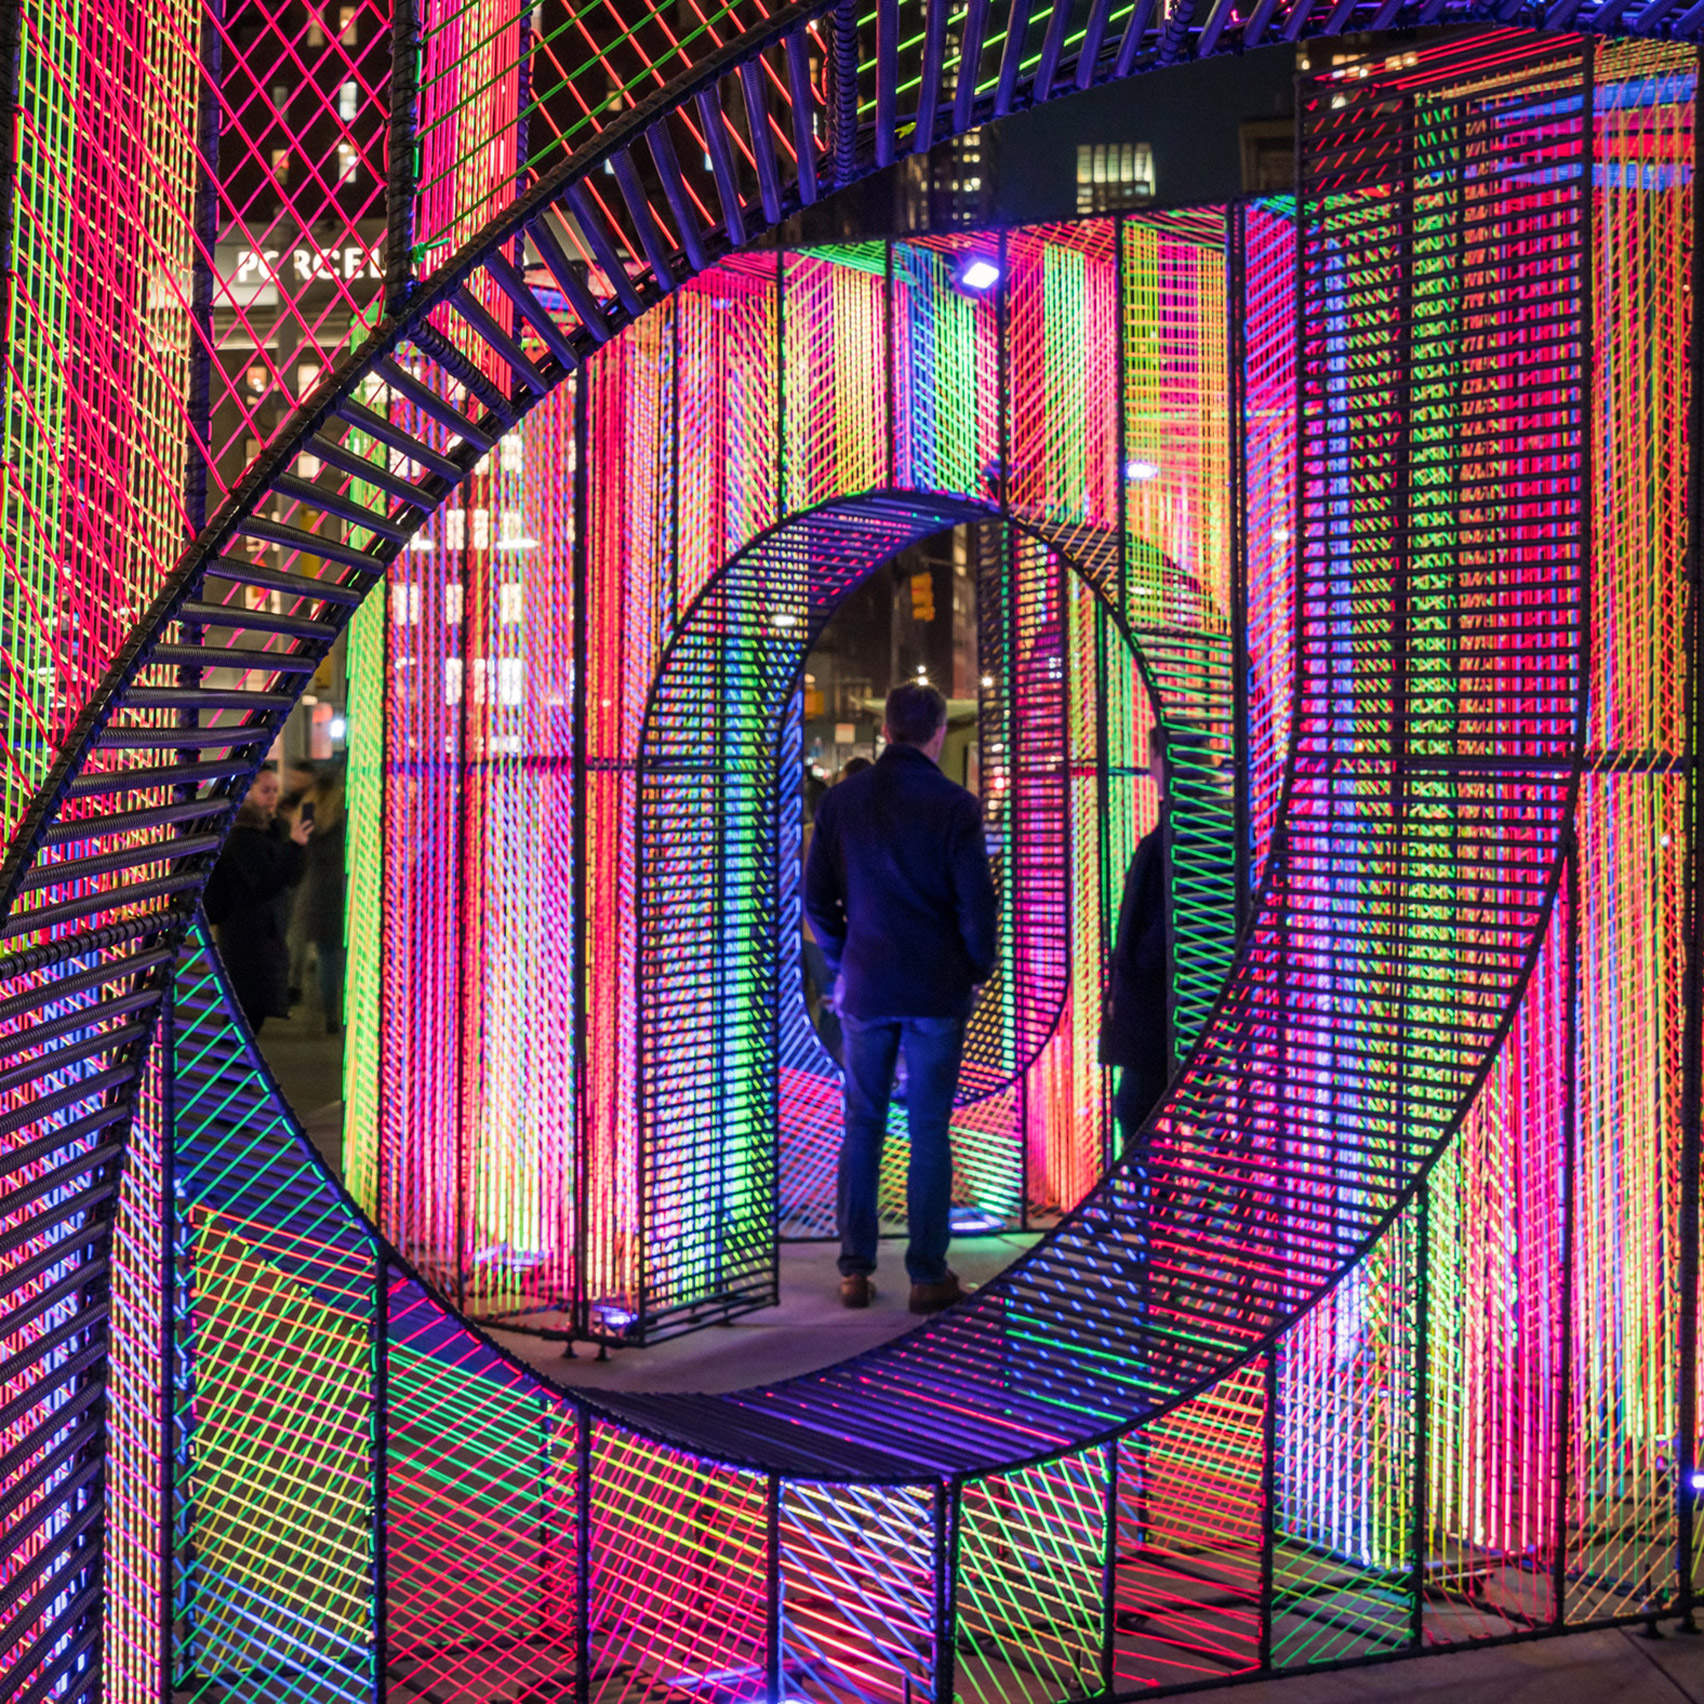 Hou de Sousa wraps rebar in colourful string for New York installation